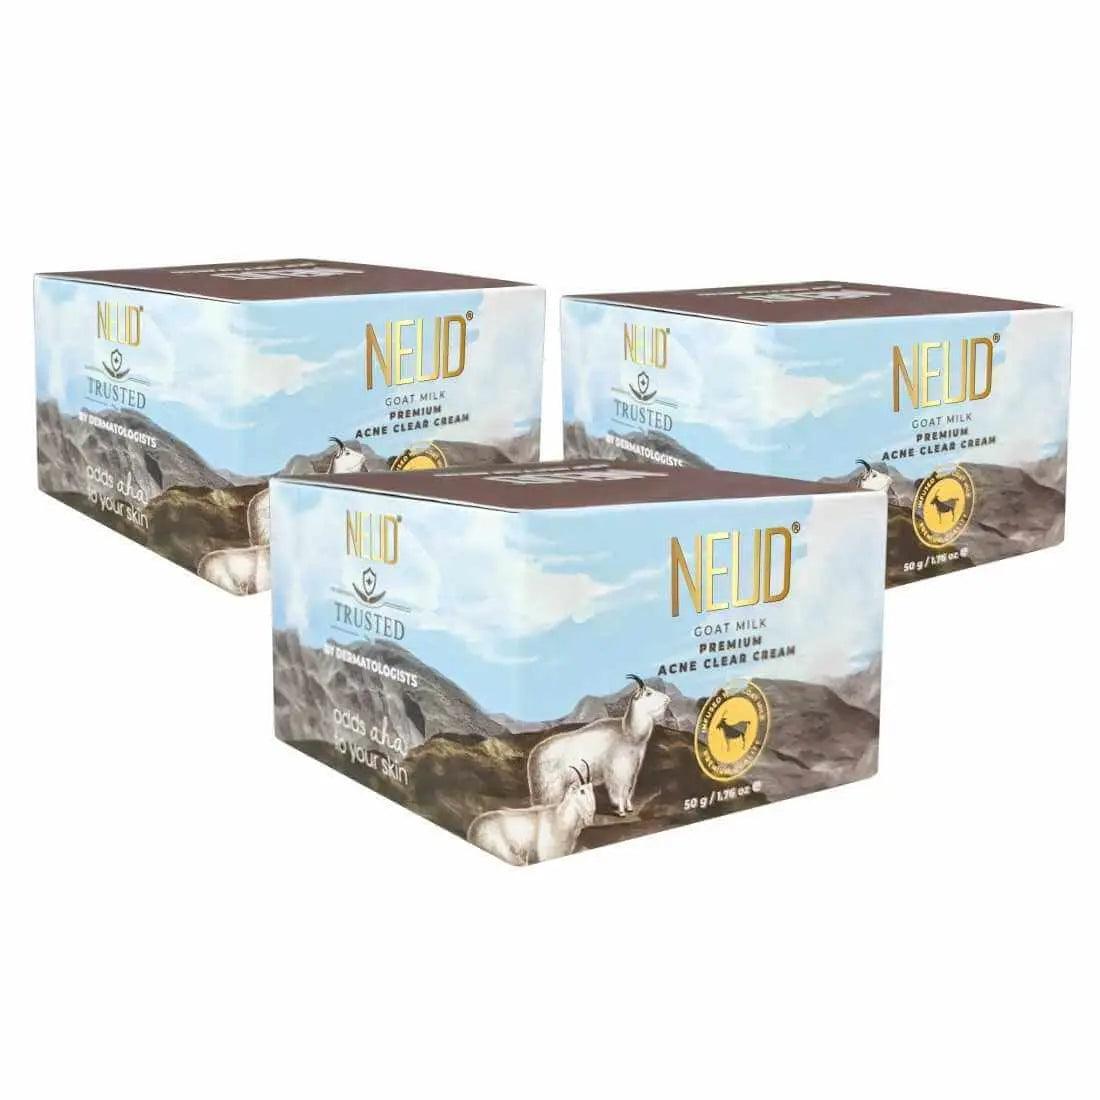 NEUD Goat Milk Acne Clear Cream for Men & Women - 50 g 9559682312358